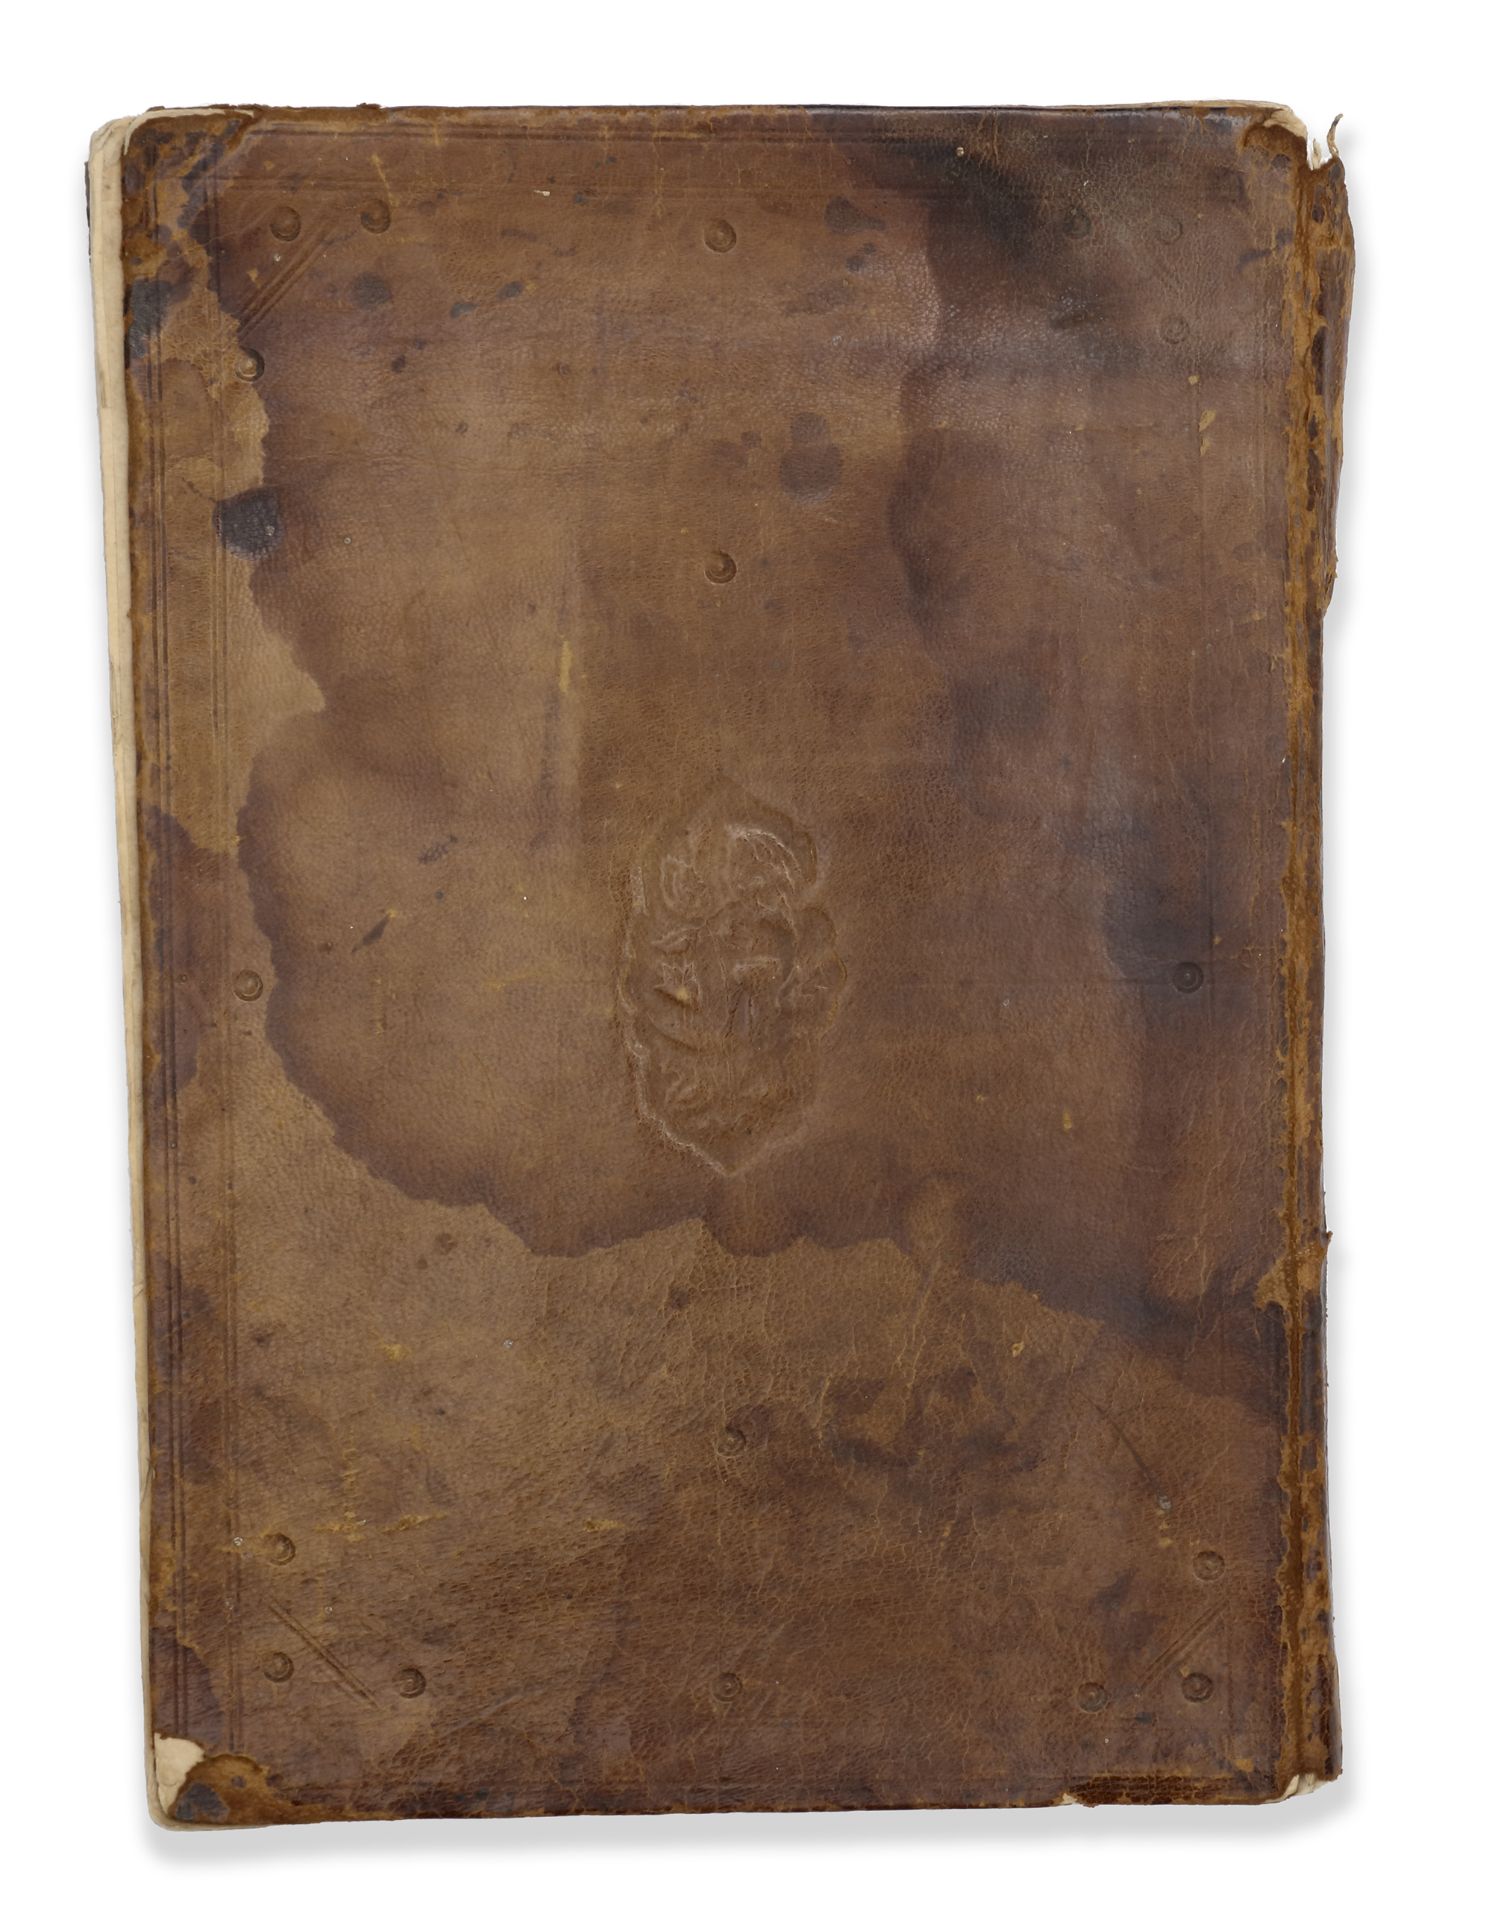 AN ILLUMINATED MAMLUK QURAN JUZ SIGNED BY DARWISH HASAN, DATED 914 AH/1508 AD - Image 3 of 3